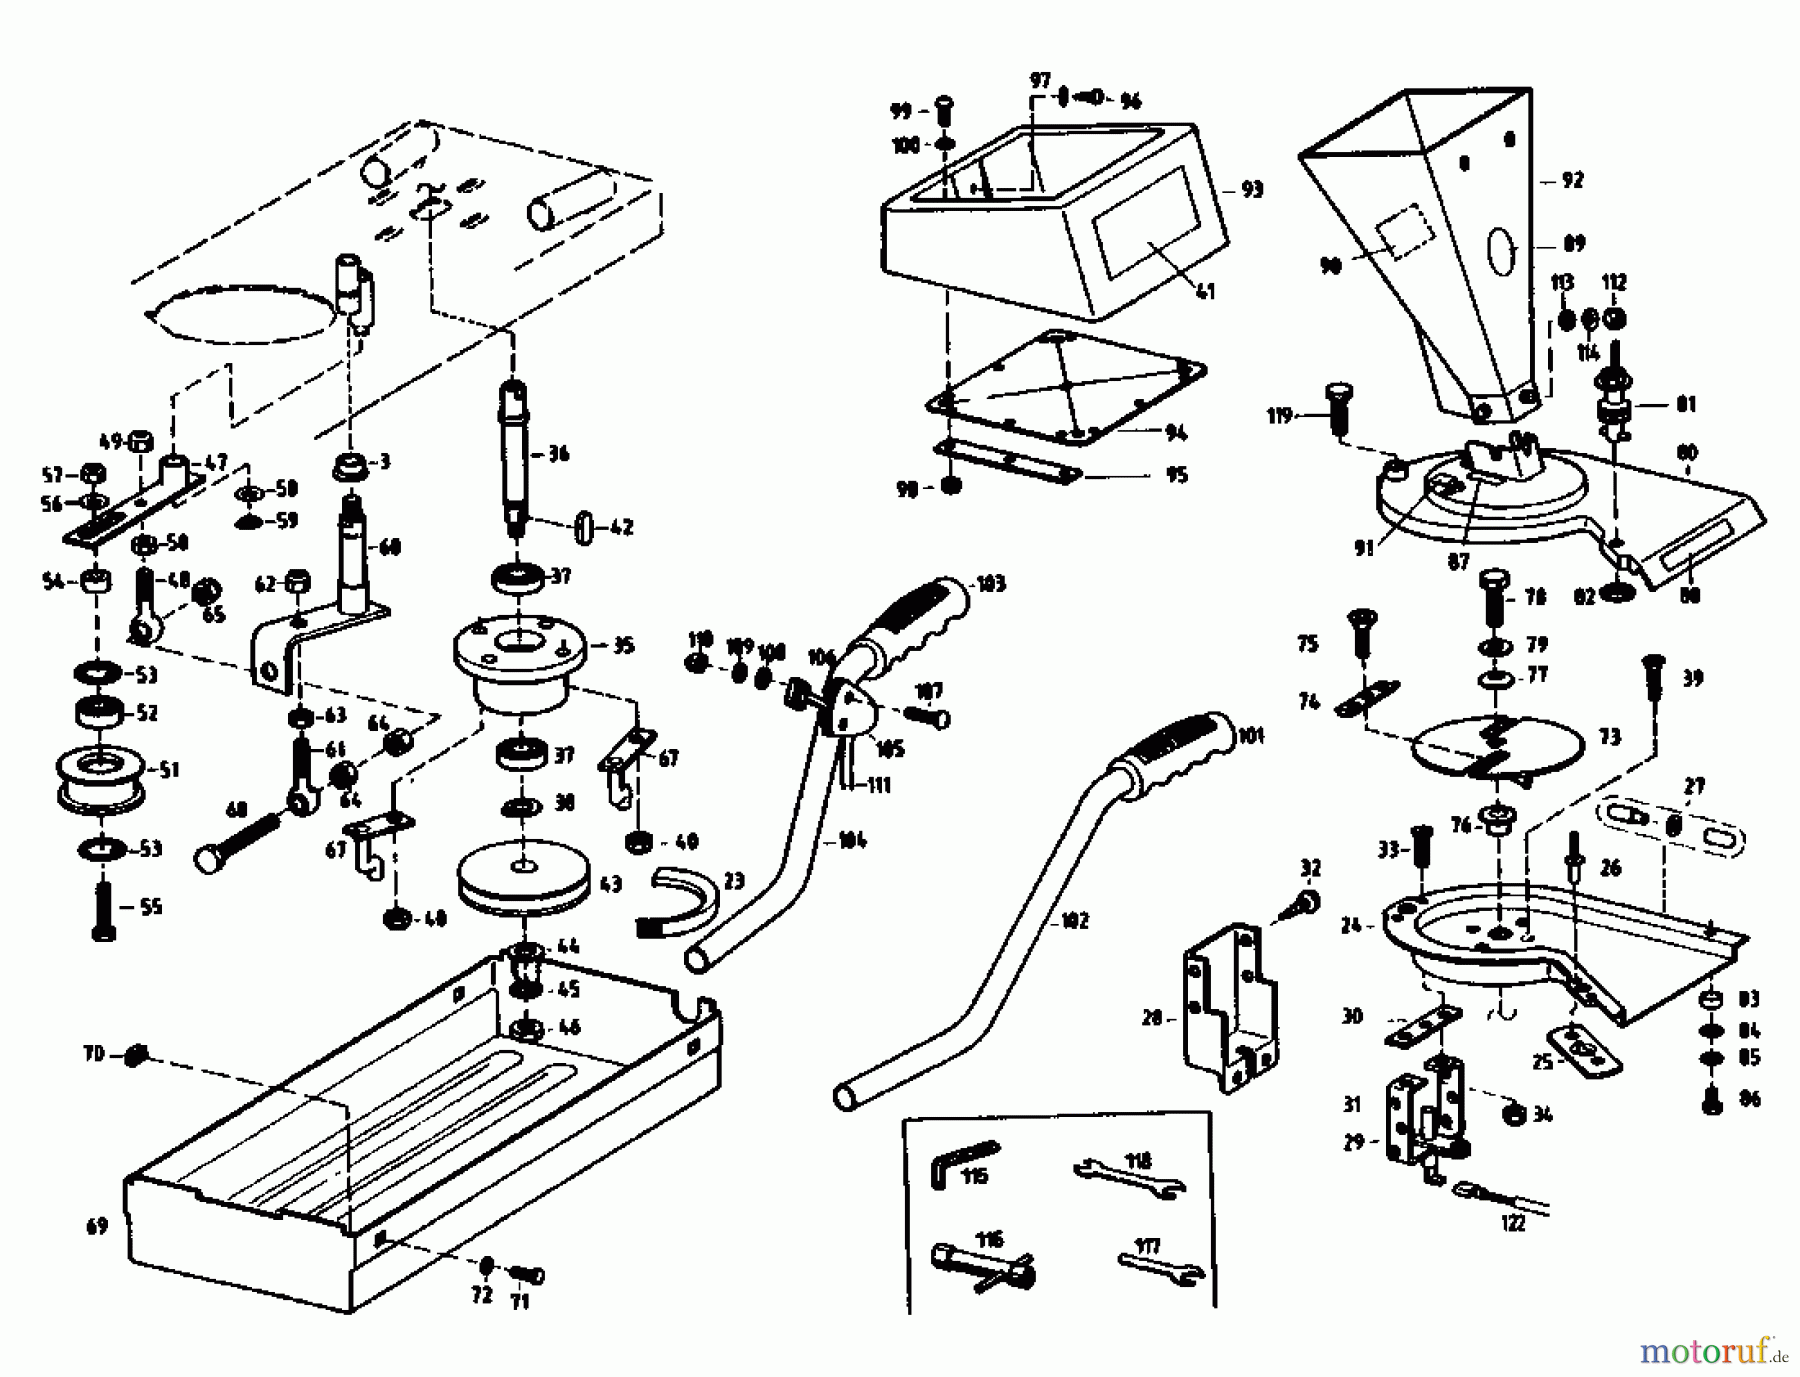  Gutbrod Chipper GAE 35 04003.03  (1992) Basic machine